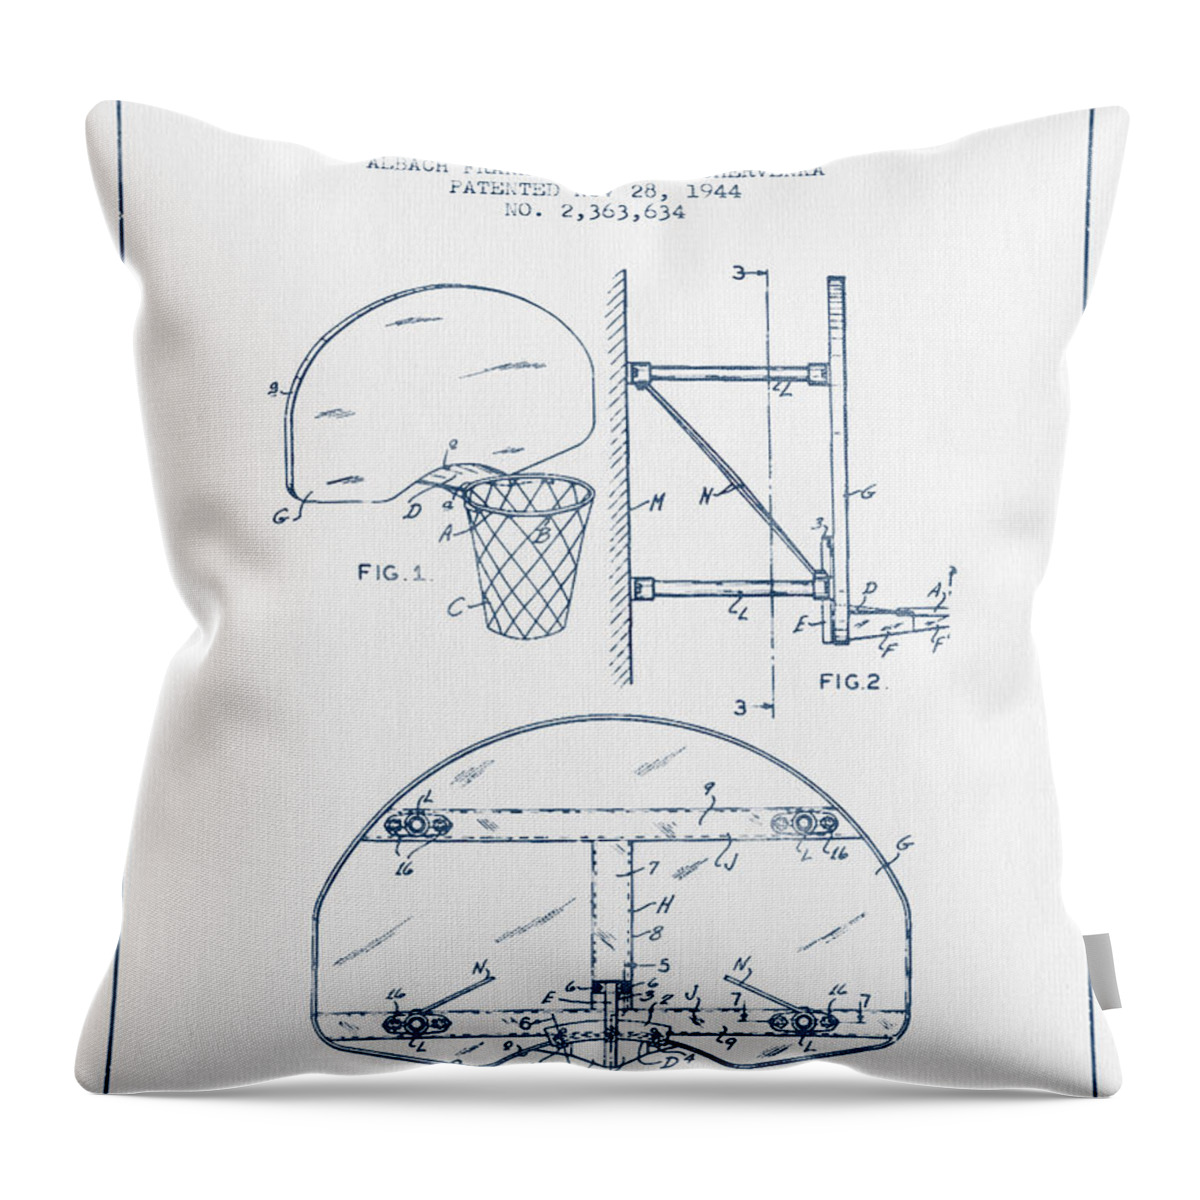 basketball throw pillow